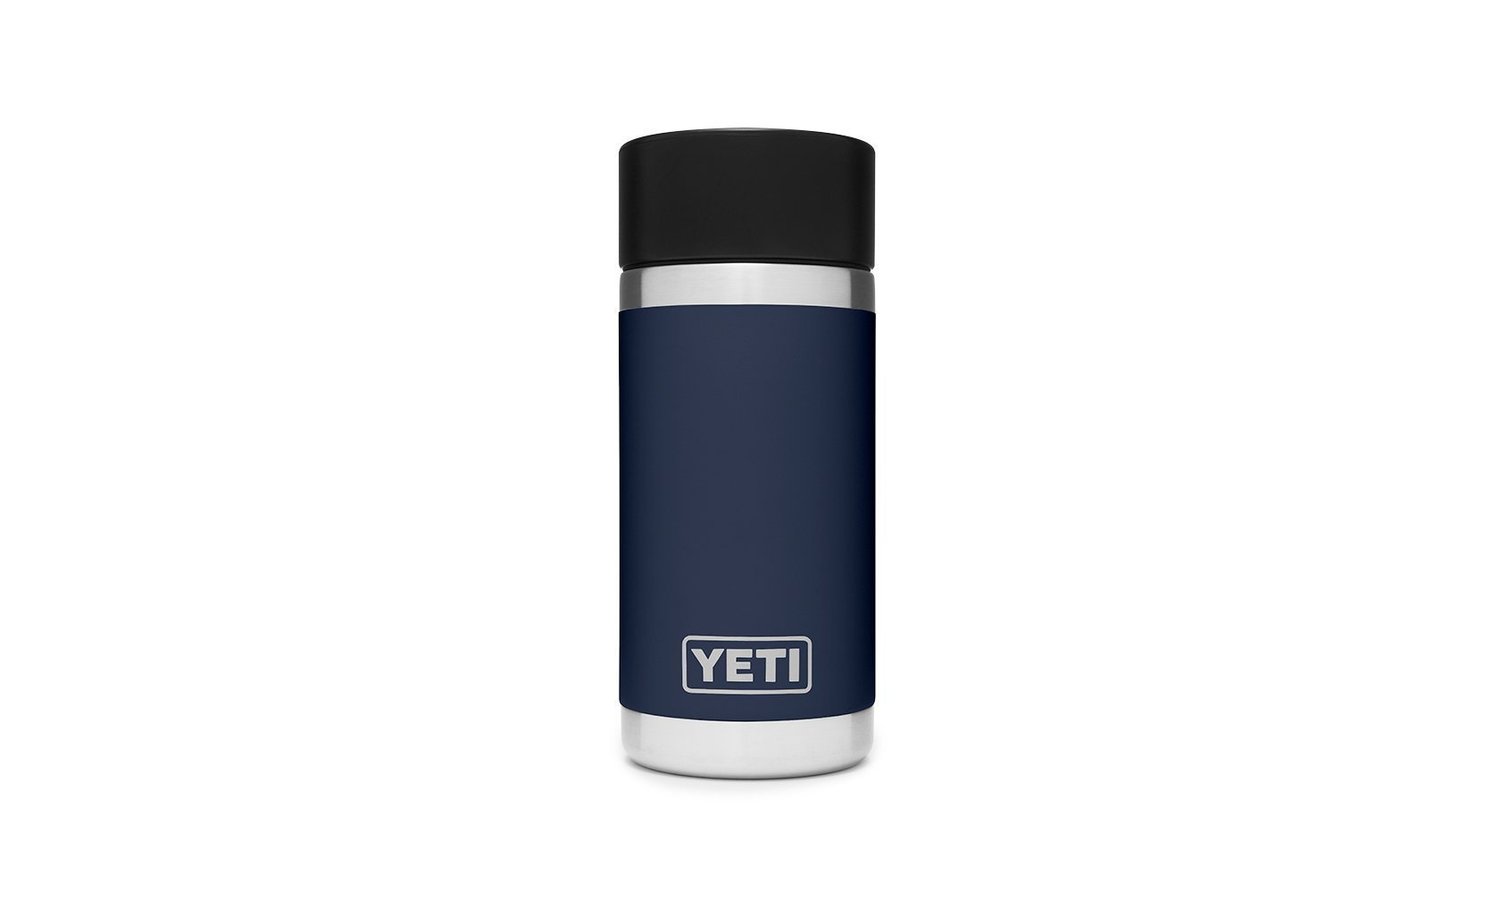 YETI Rambler 18 oz Bottle, Stainless Steel, Vacuum Insulated, with Hot Shot  Cap, Bimini Pink